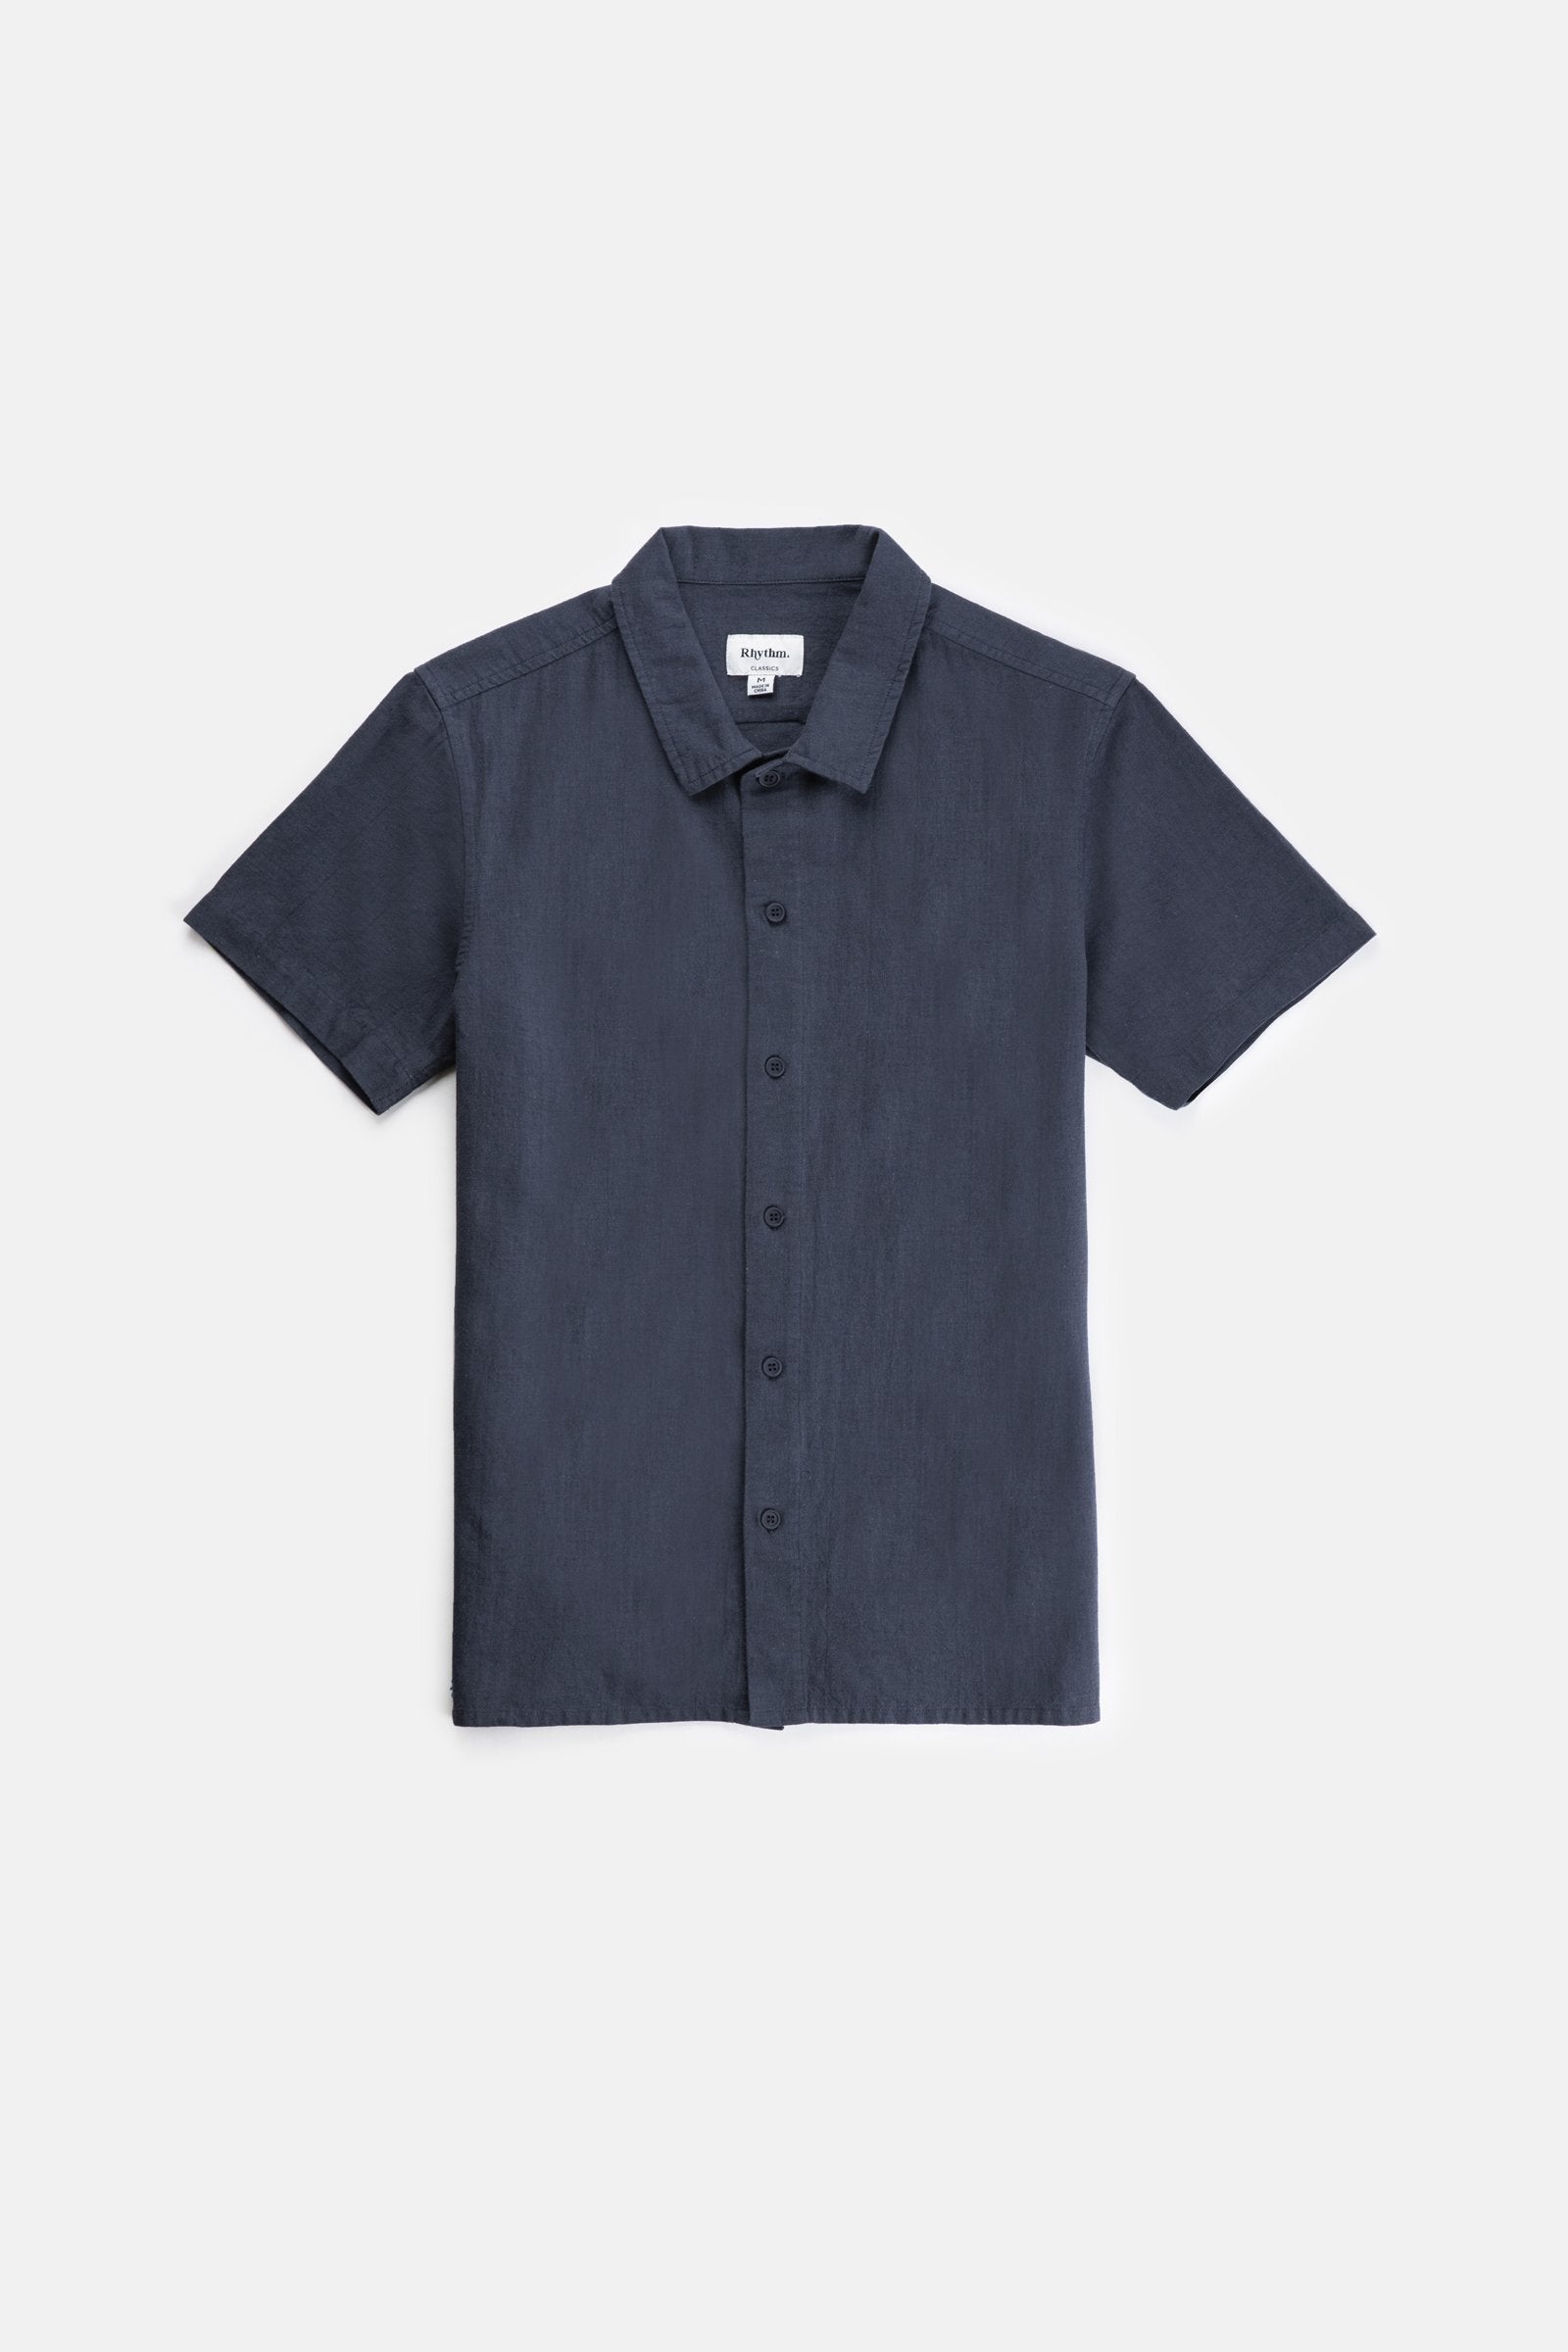 Classic Linen SS Shirt Worn Navy – Rhythm US